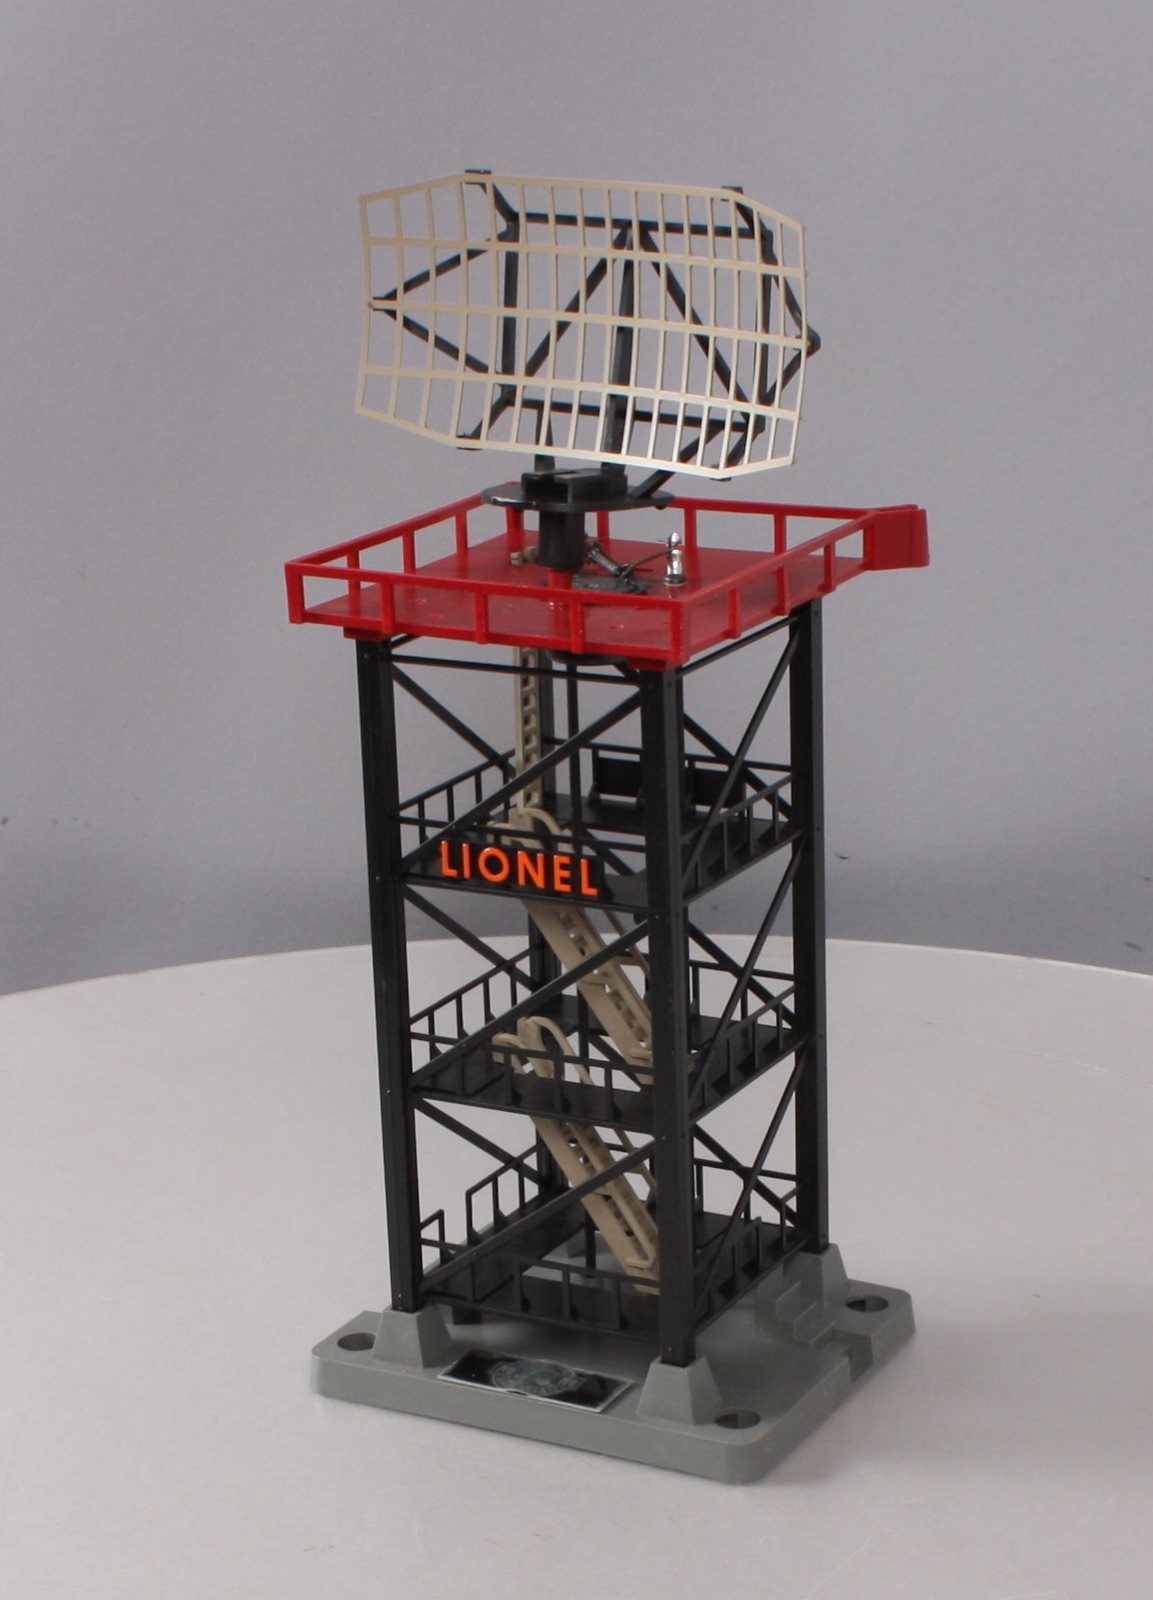 Lionel 6-12964 Disney Donald Duck Radar Antenna